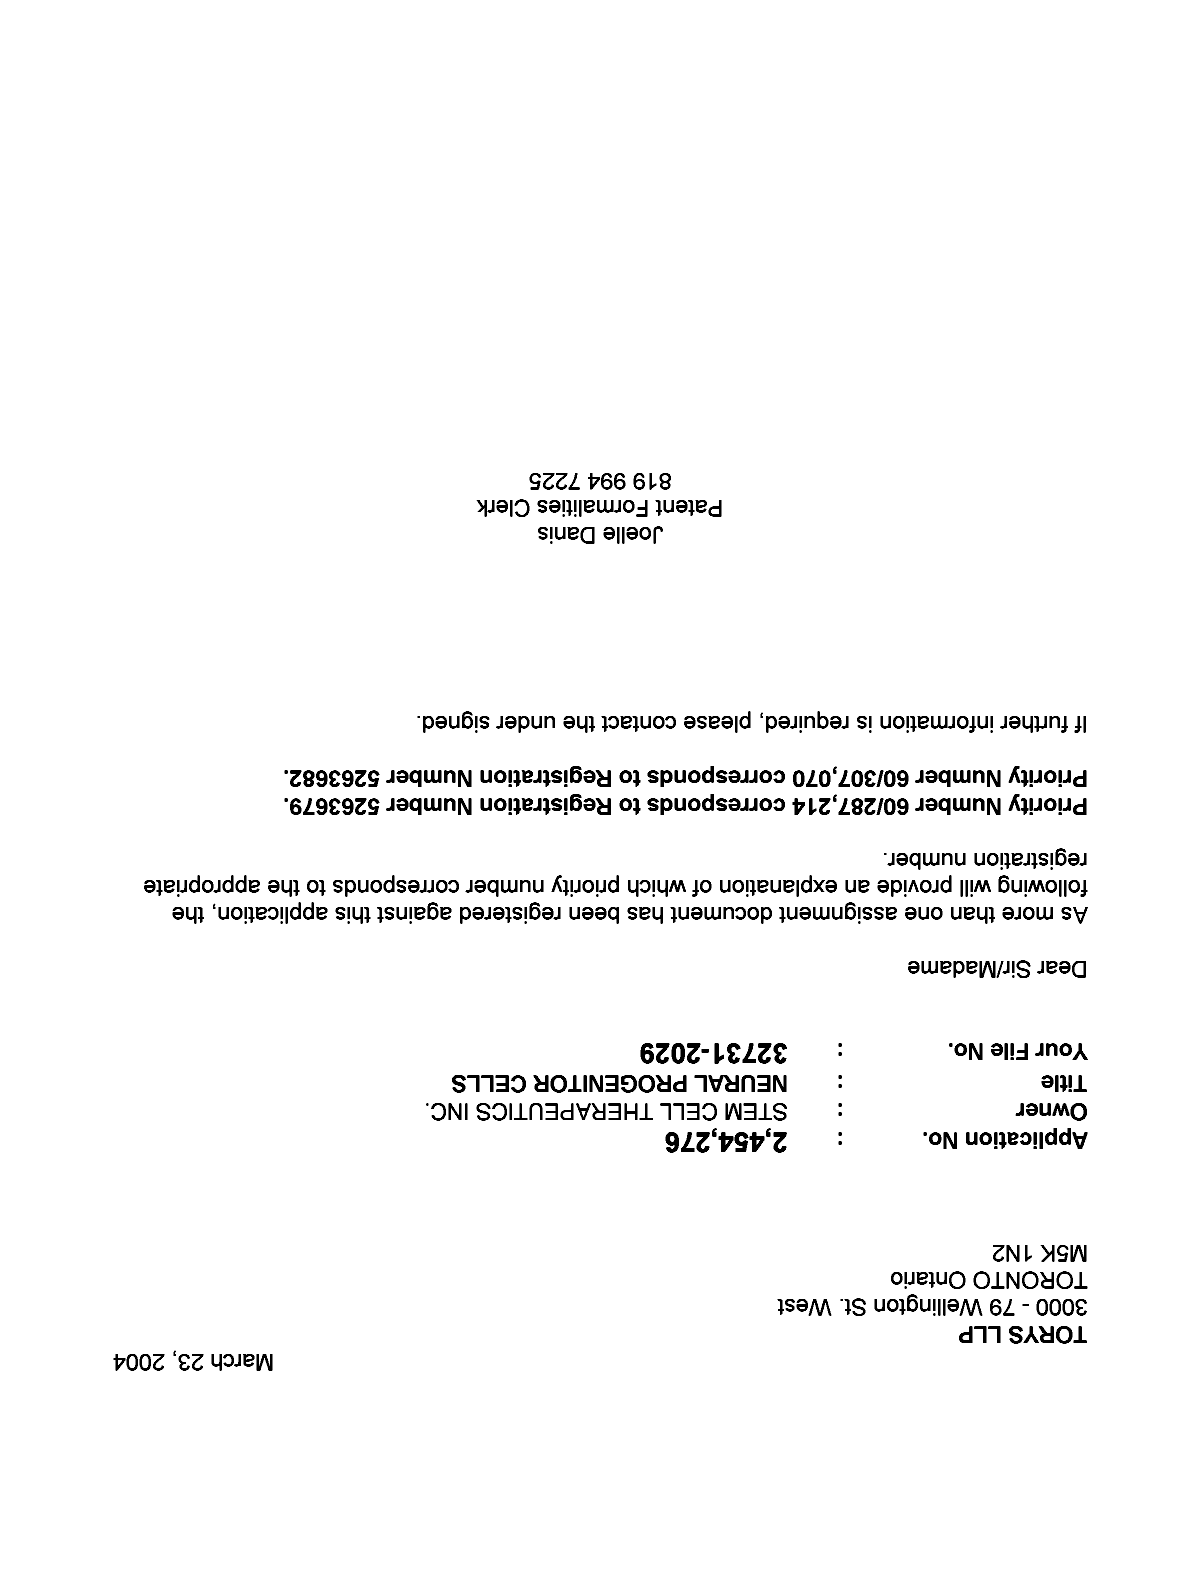 Canadian Patent Document 2454276. Correspondence 20031218. Image 1 of 1